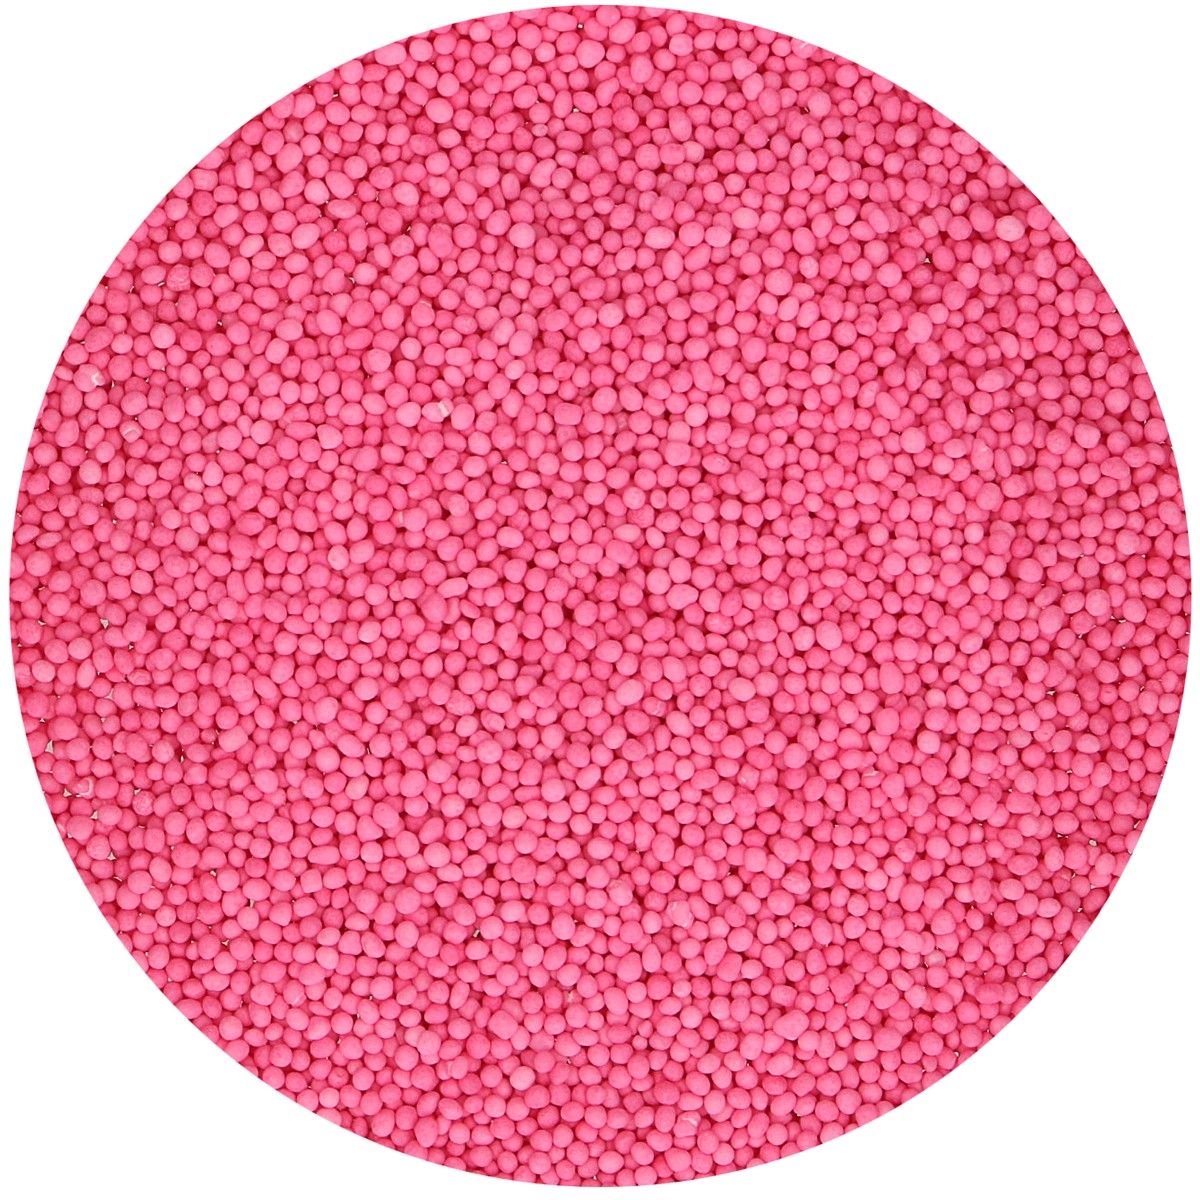 Posyp Fun Cakes - Nonpareils Dark Pink 80g, F51520